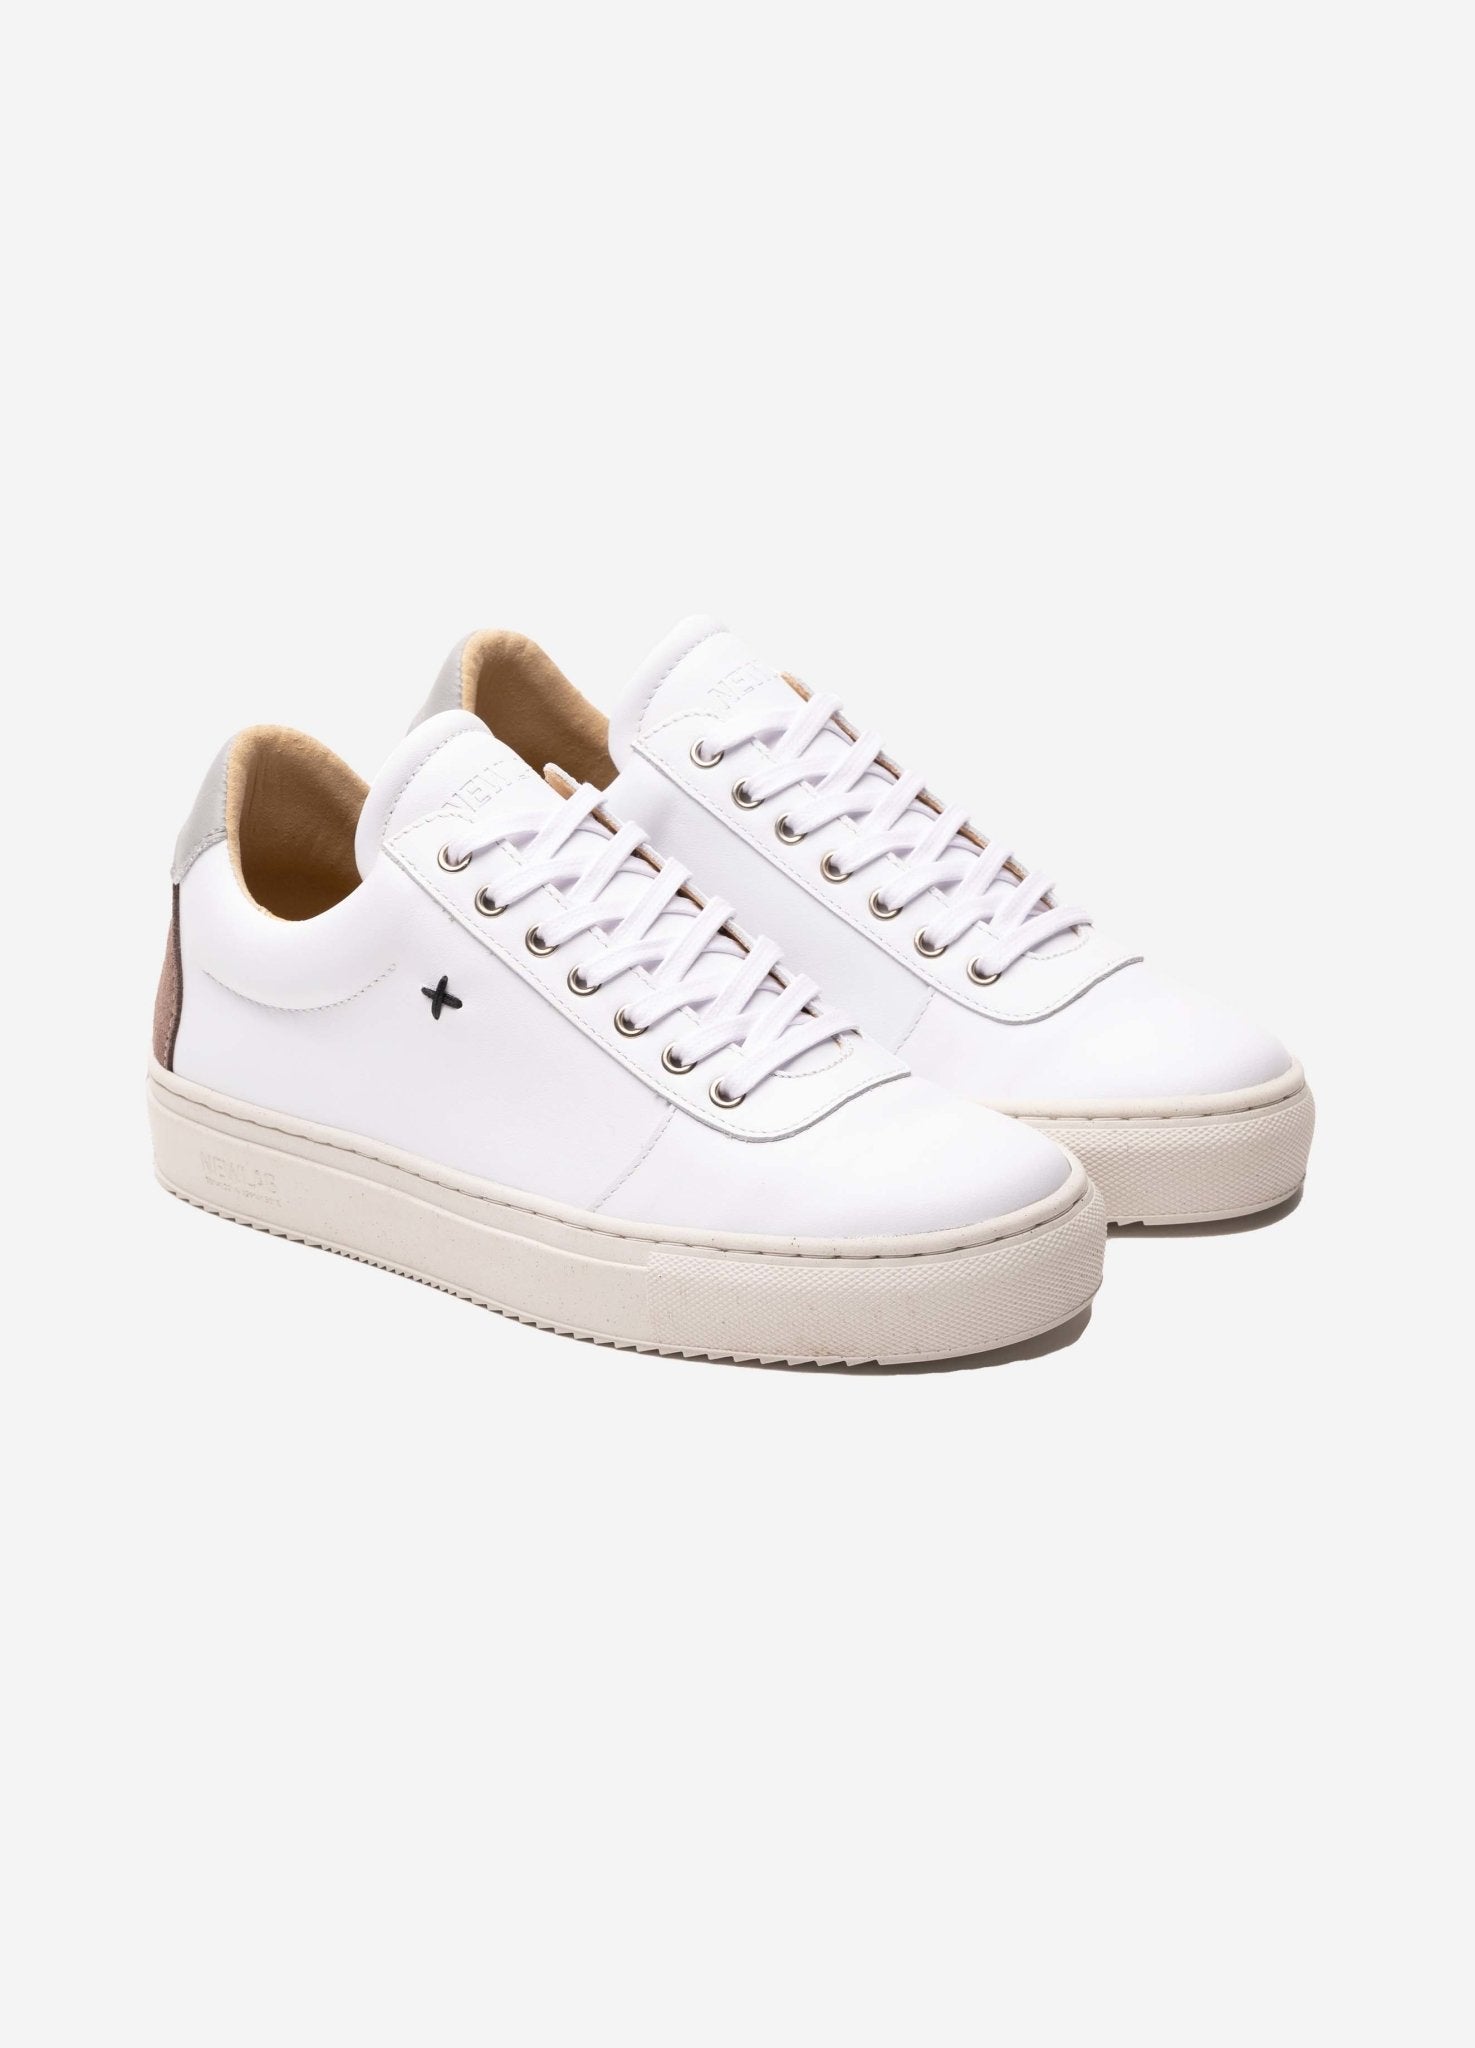 NL06 White/Grey - NEWLAB - Chaussures - NEWLAB